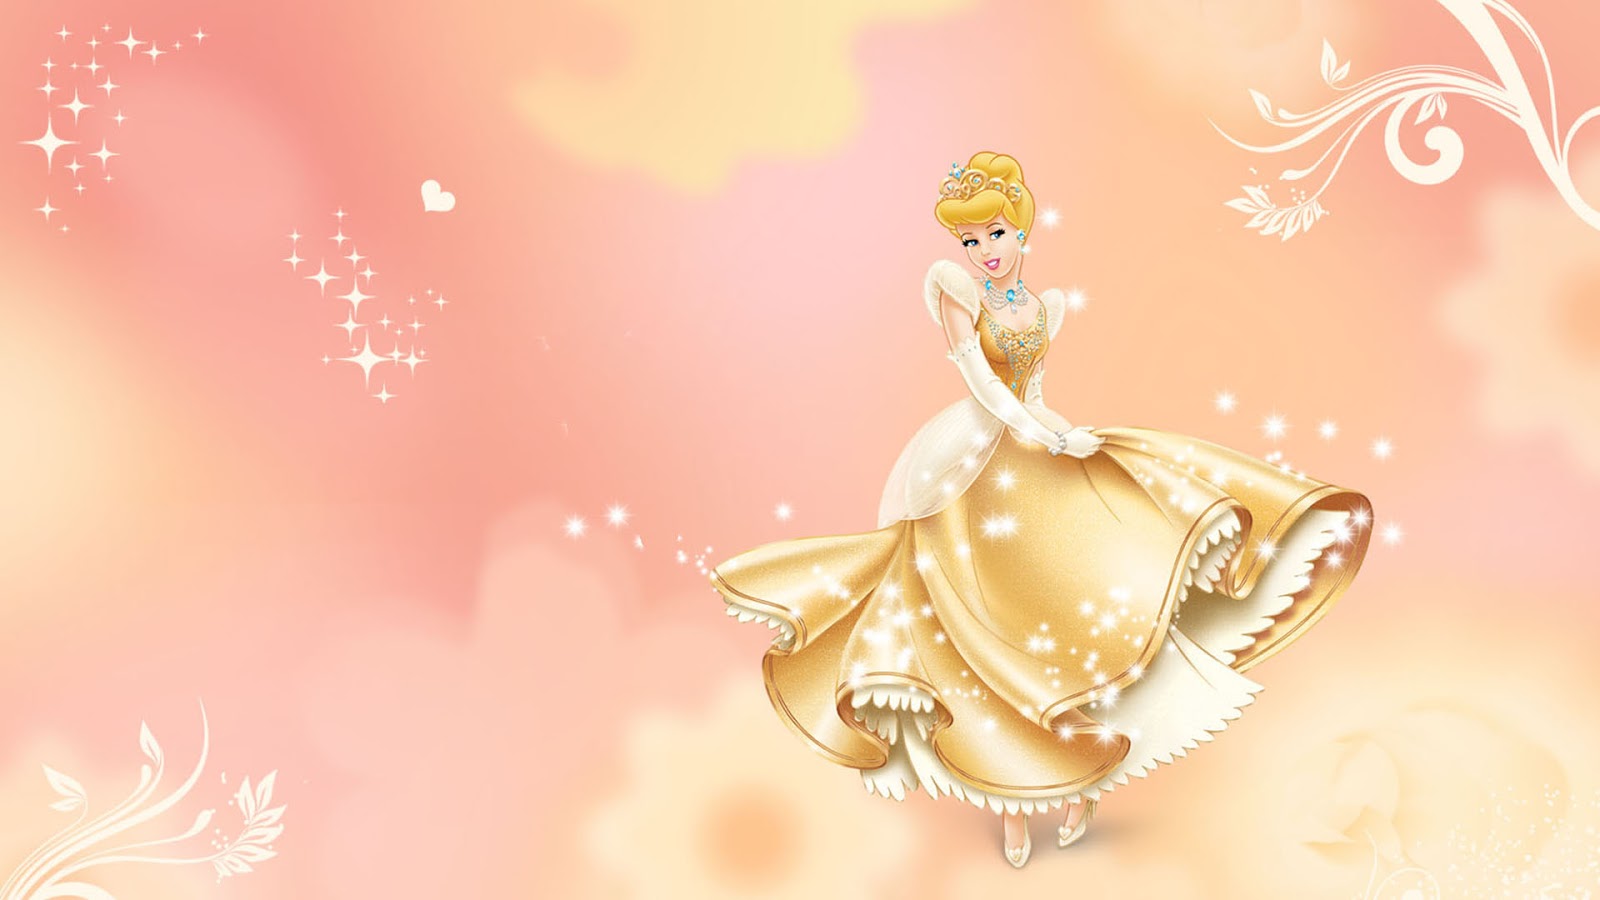 Castle Of Princess Cinderella Cartoon Walt Disney Desktop Hd Wallpaper For  Tablet Mobile Phones And Pc 3840x2400  Wallpapers13com